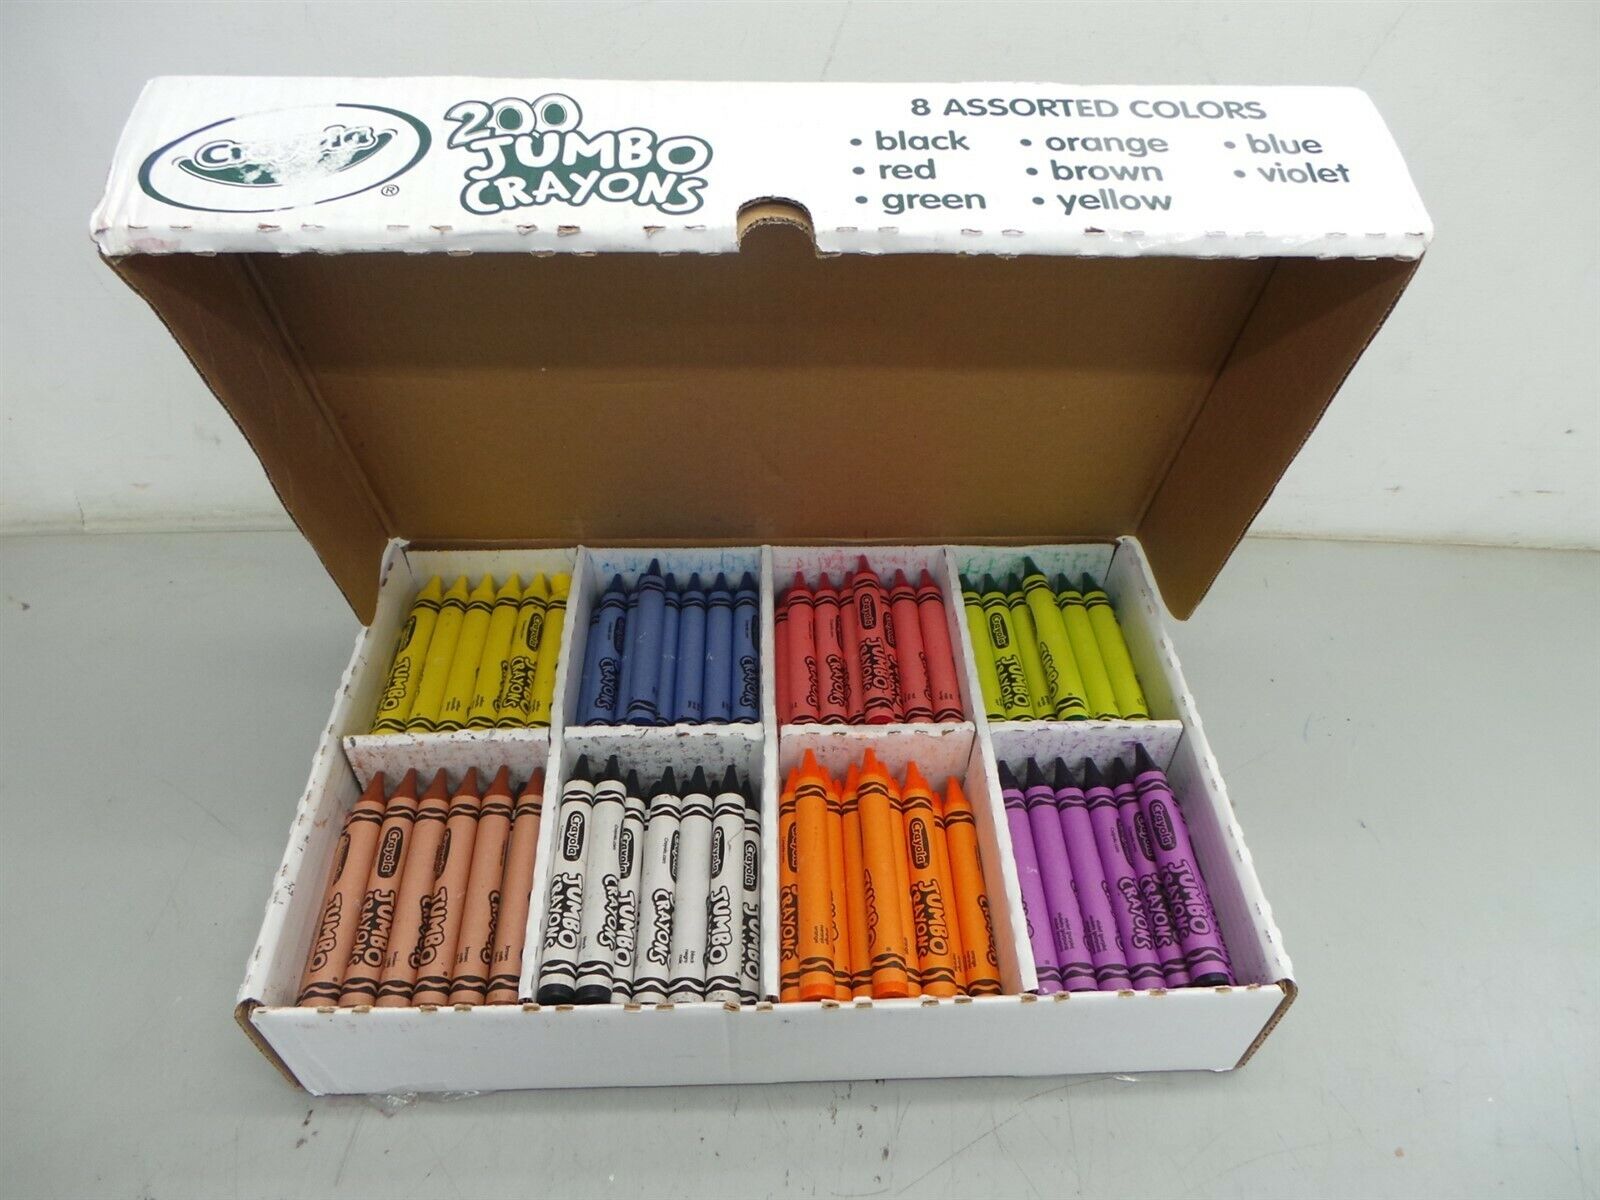  Crayola Jumbo Crayons Classpack, 200 Count & Colored Pencils,  Bulk Classpack : Toys & Games